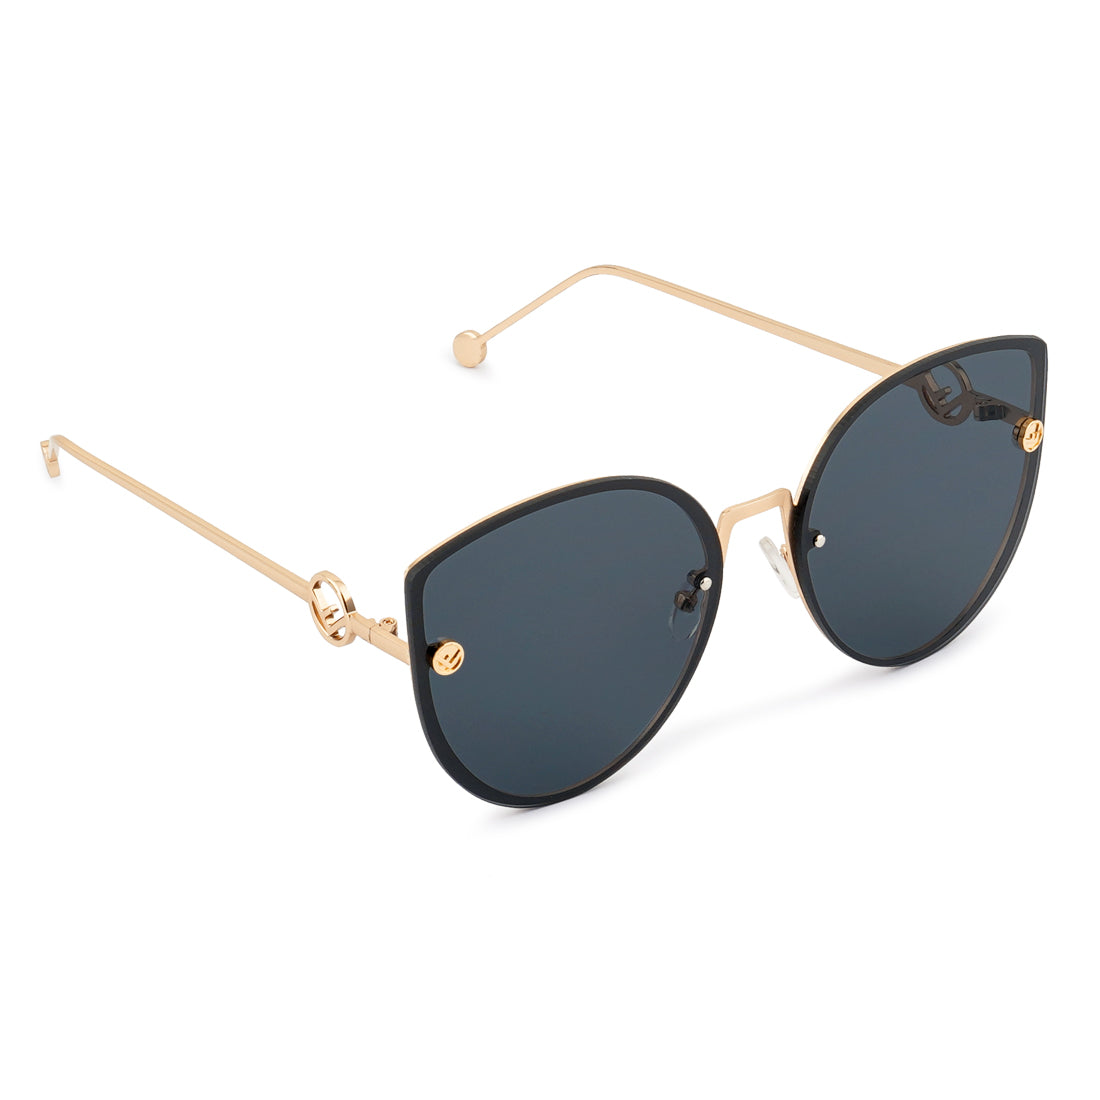 Cateye Sunglasses In Black